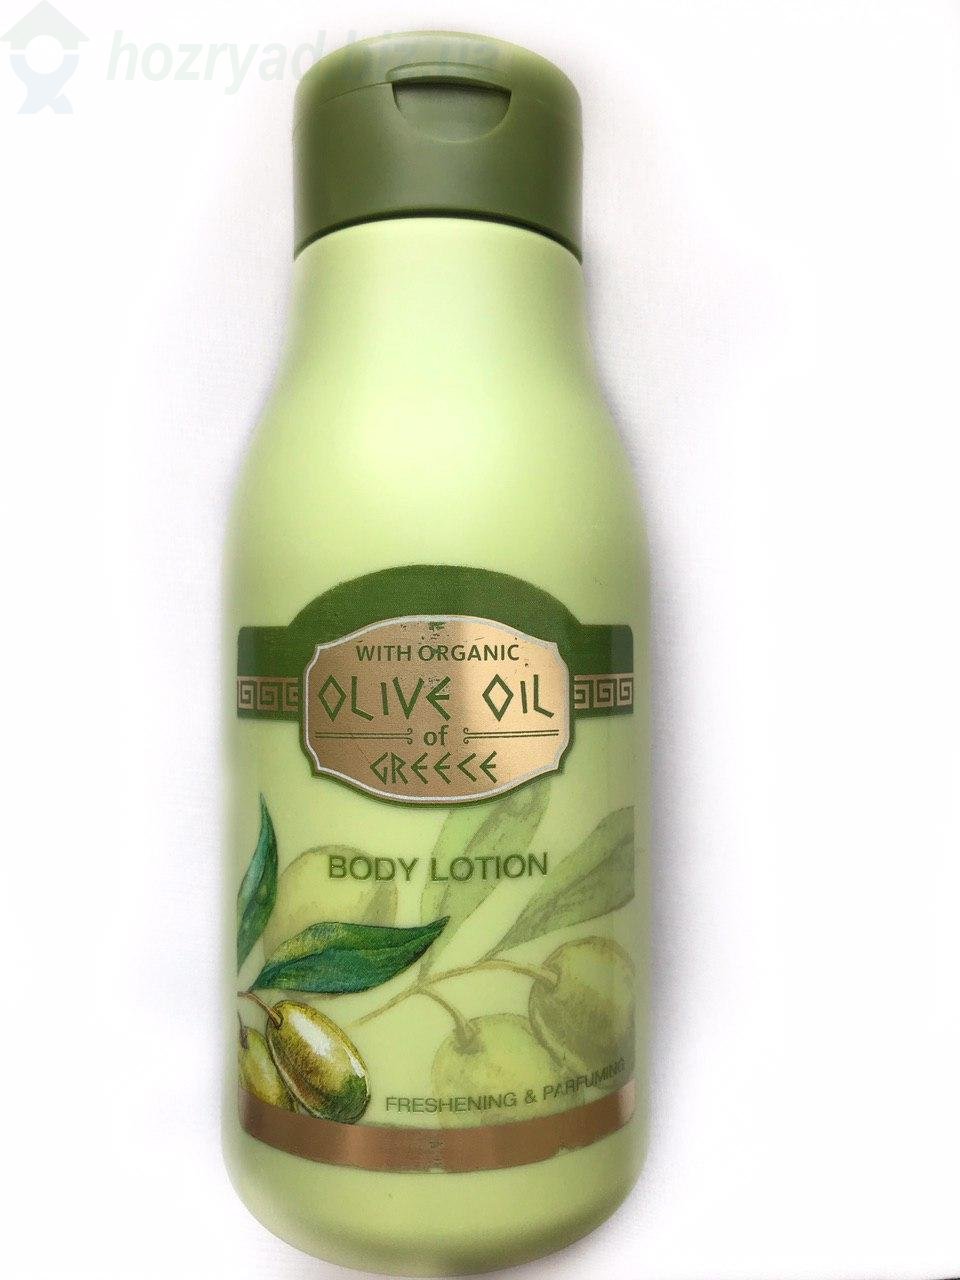    "Olive oil of Greece"/Body lotion freshening & parfuming Olive Oil of Greece 300ml